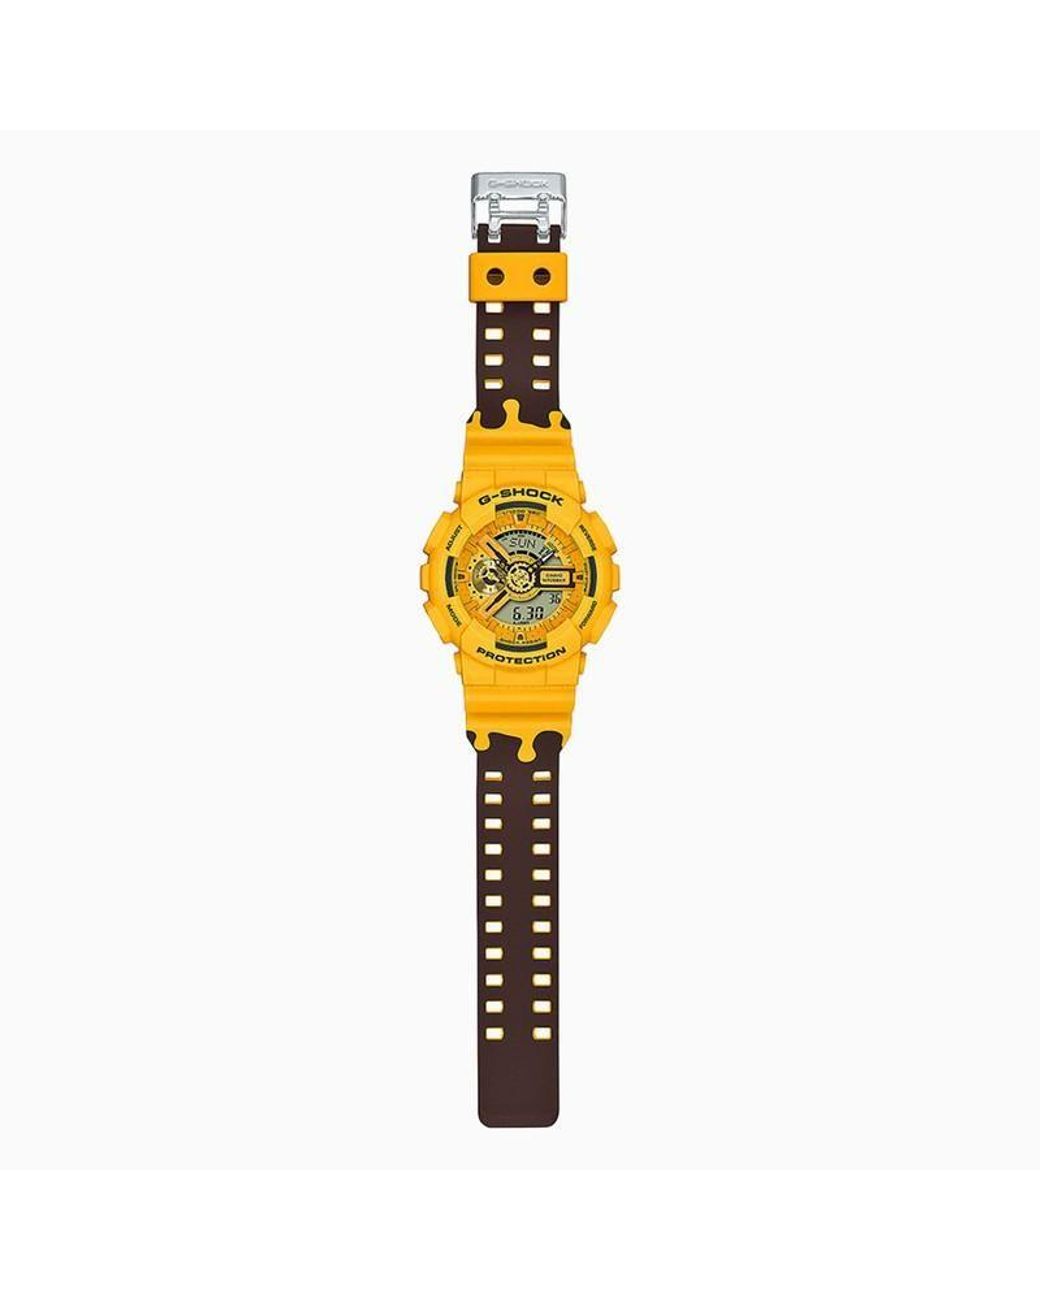 G-Shock G-shock Ga-110slc-9a Watch in Metallic for Men | Lyst